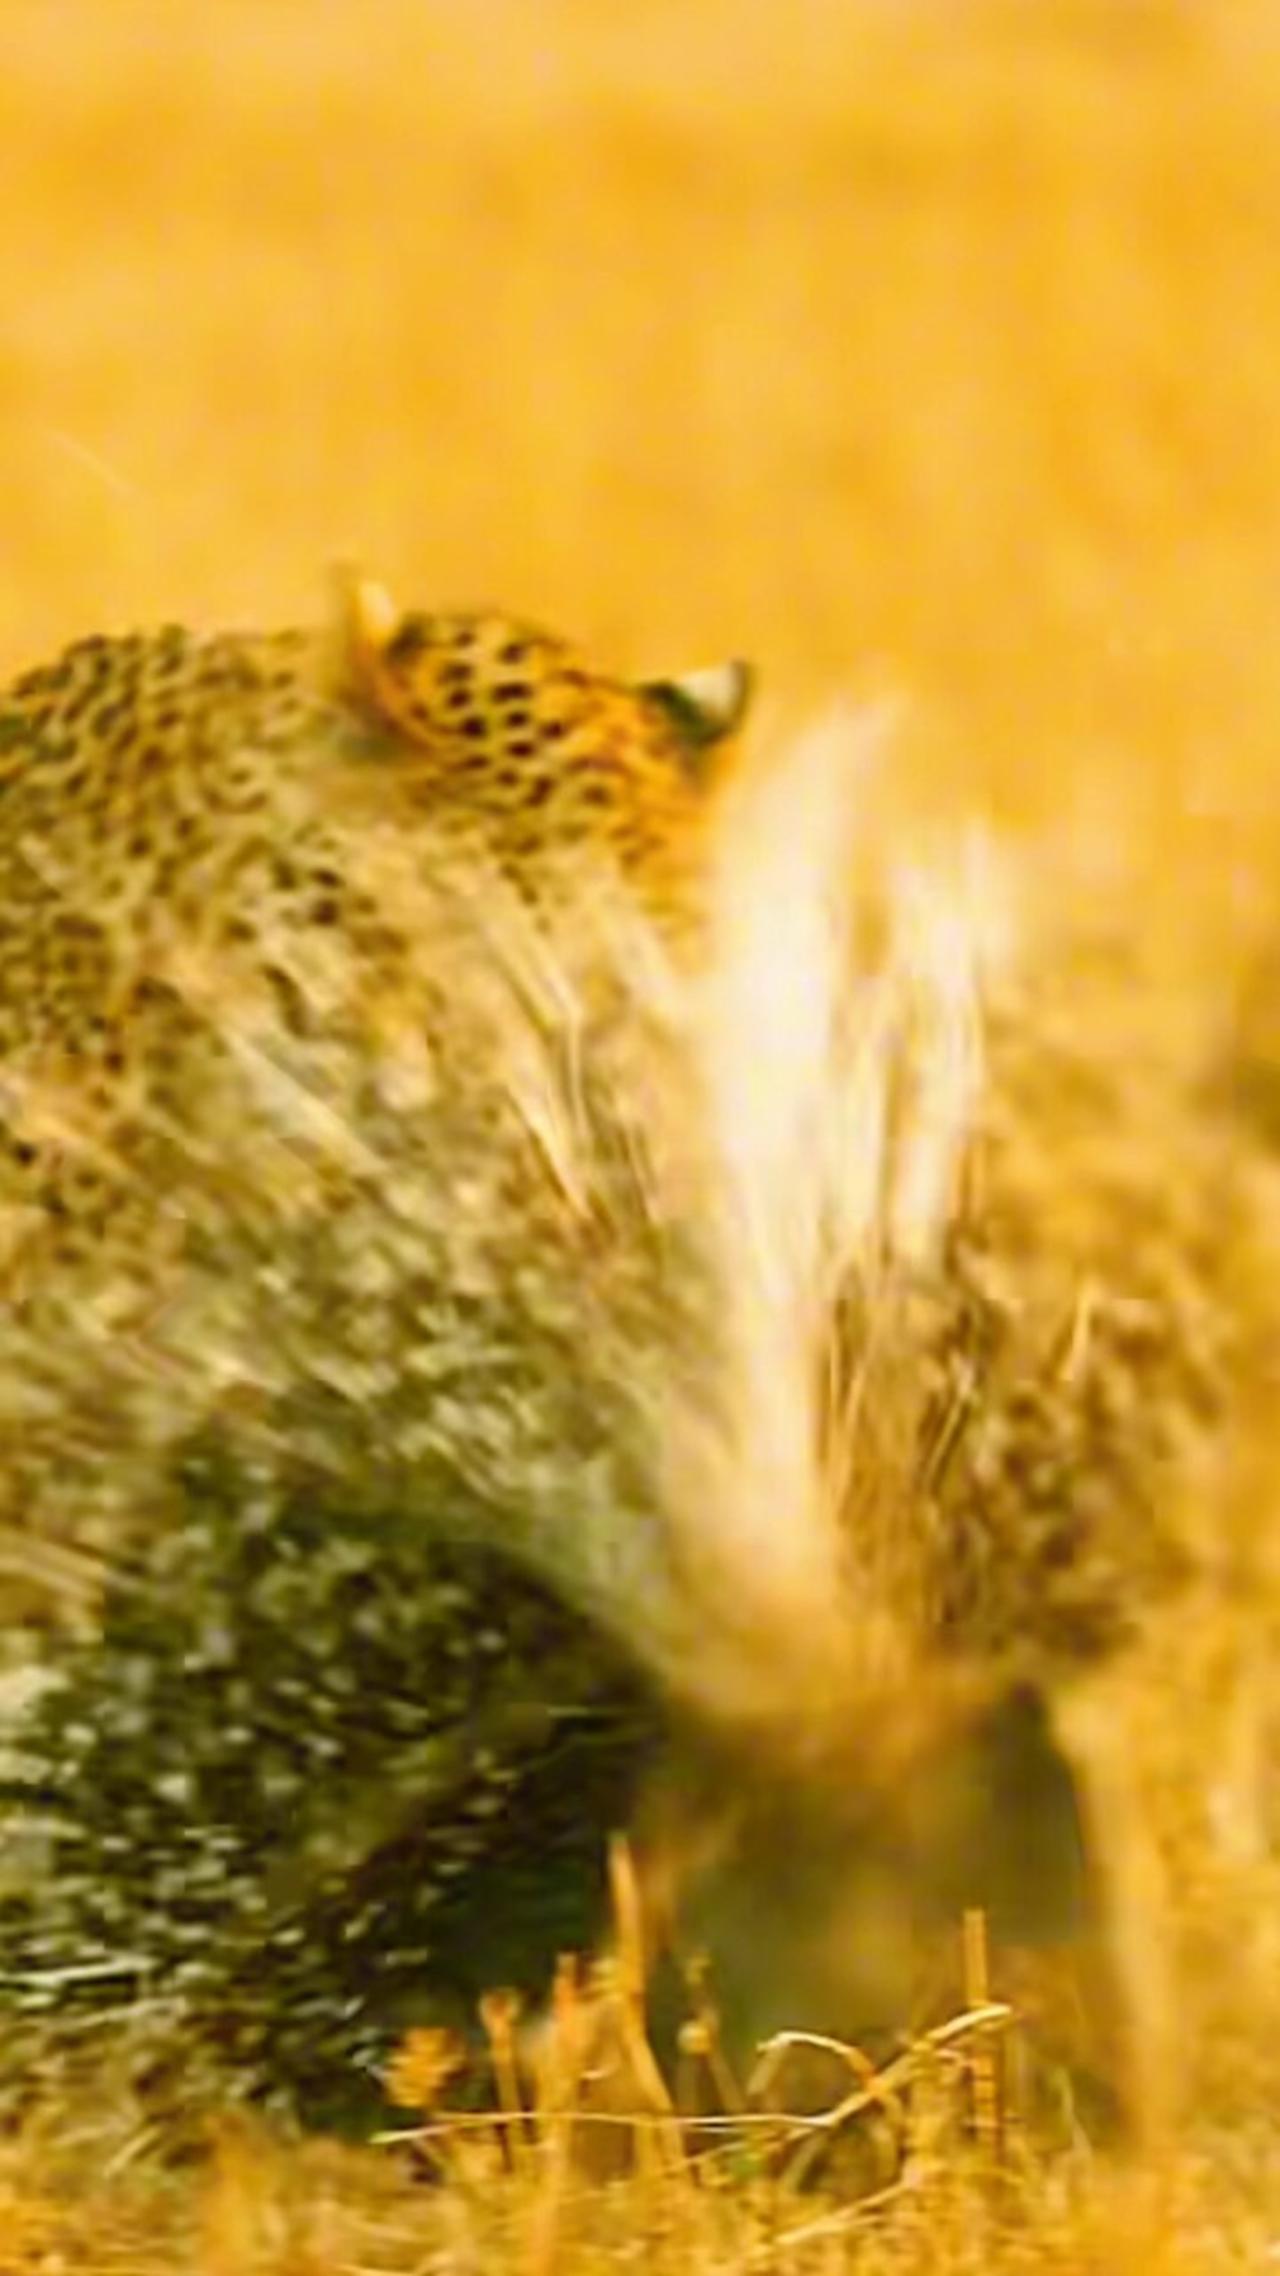 Leopard Vs Porcupine #wild #wildanimals #wildlife #leopard